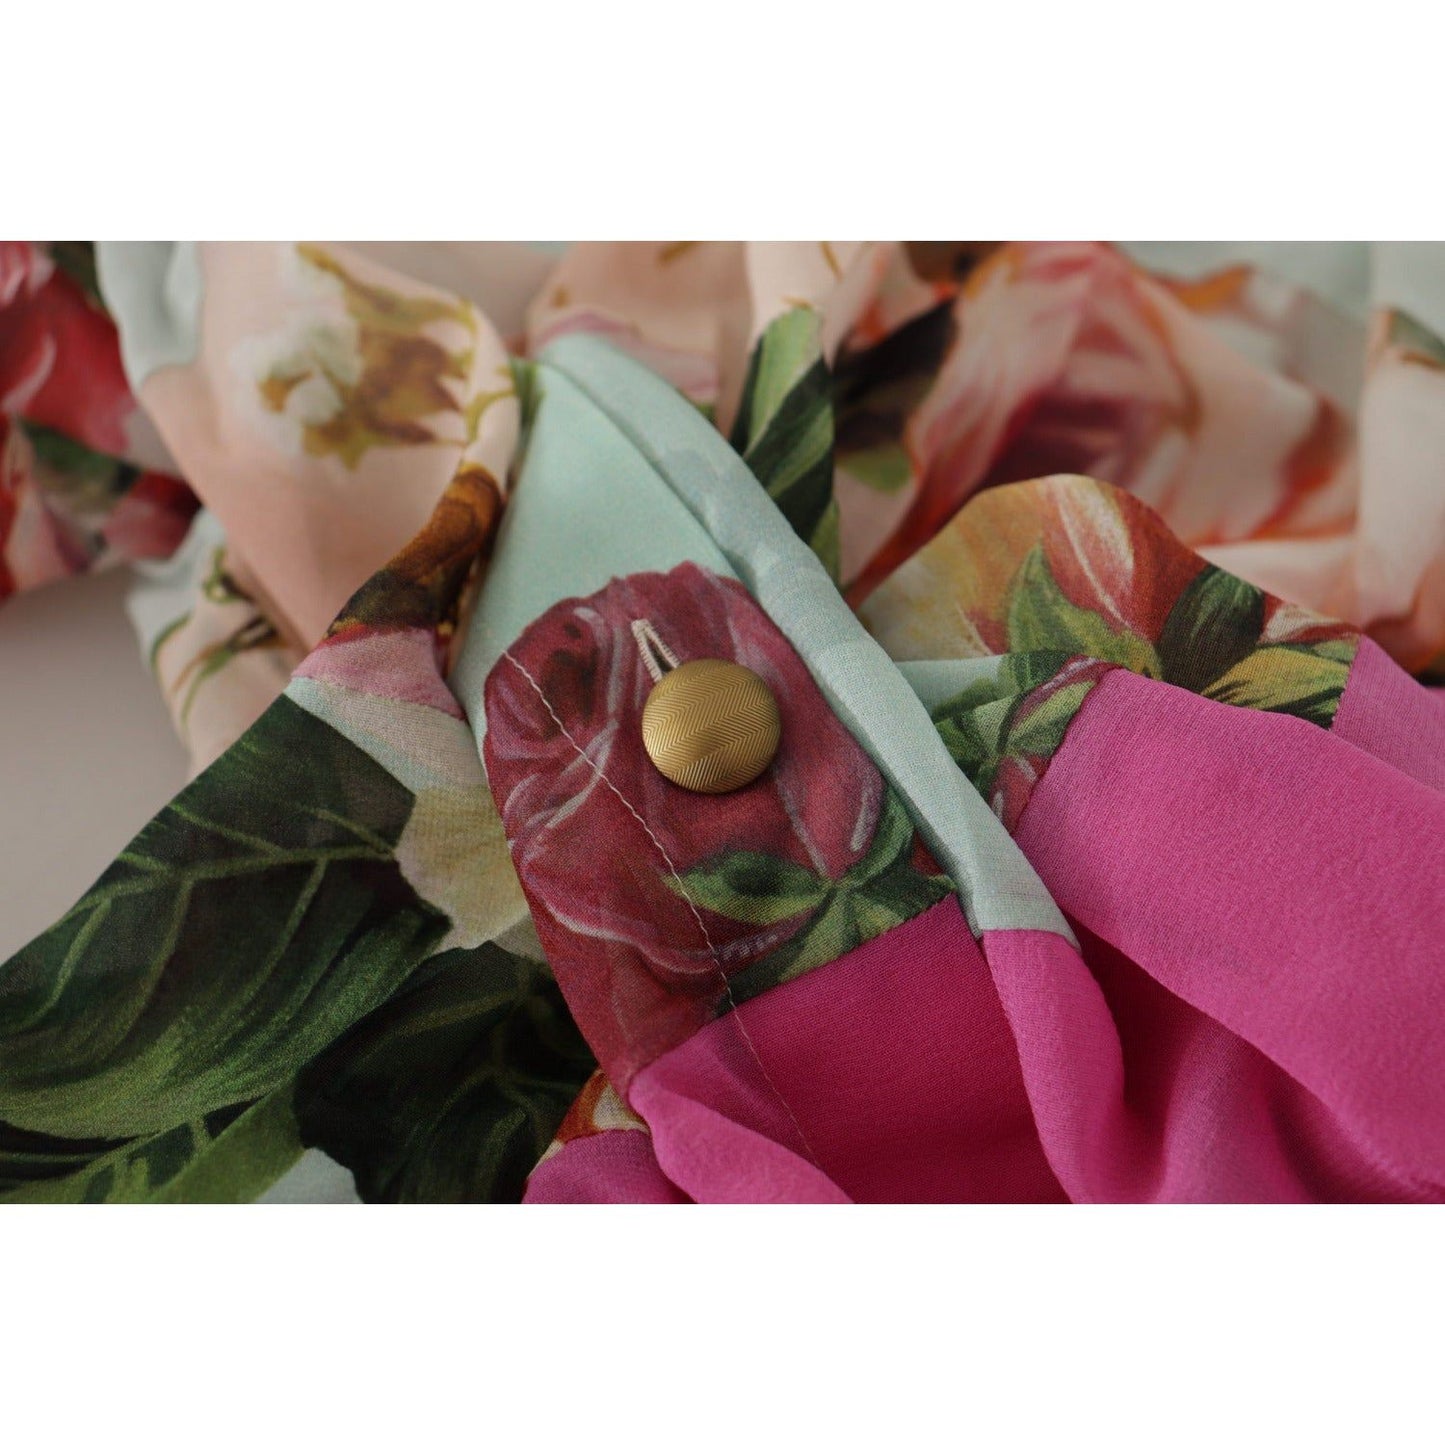 Dolce & GabbanaElegant Floral Patchwork Silk BlouseMcRichard Designer Brands£899.00